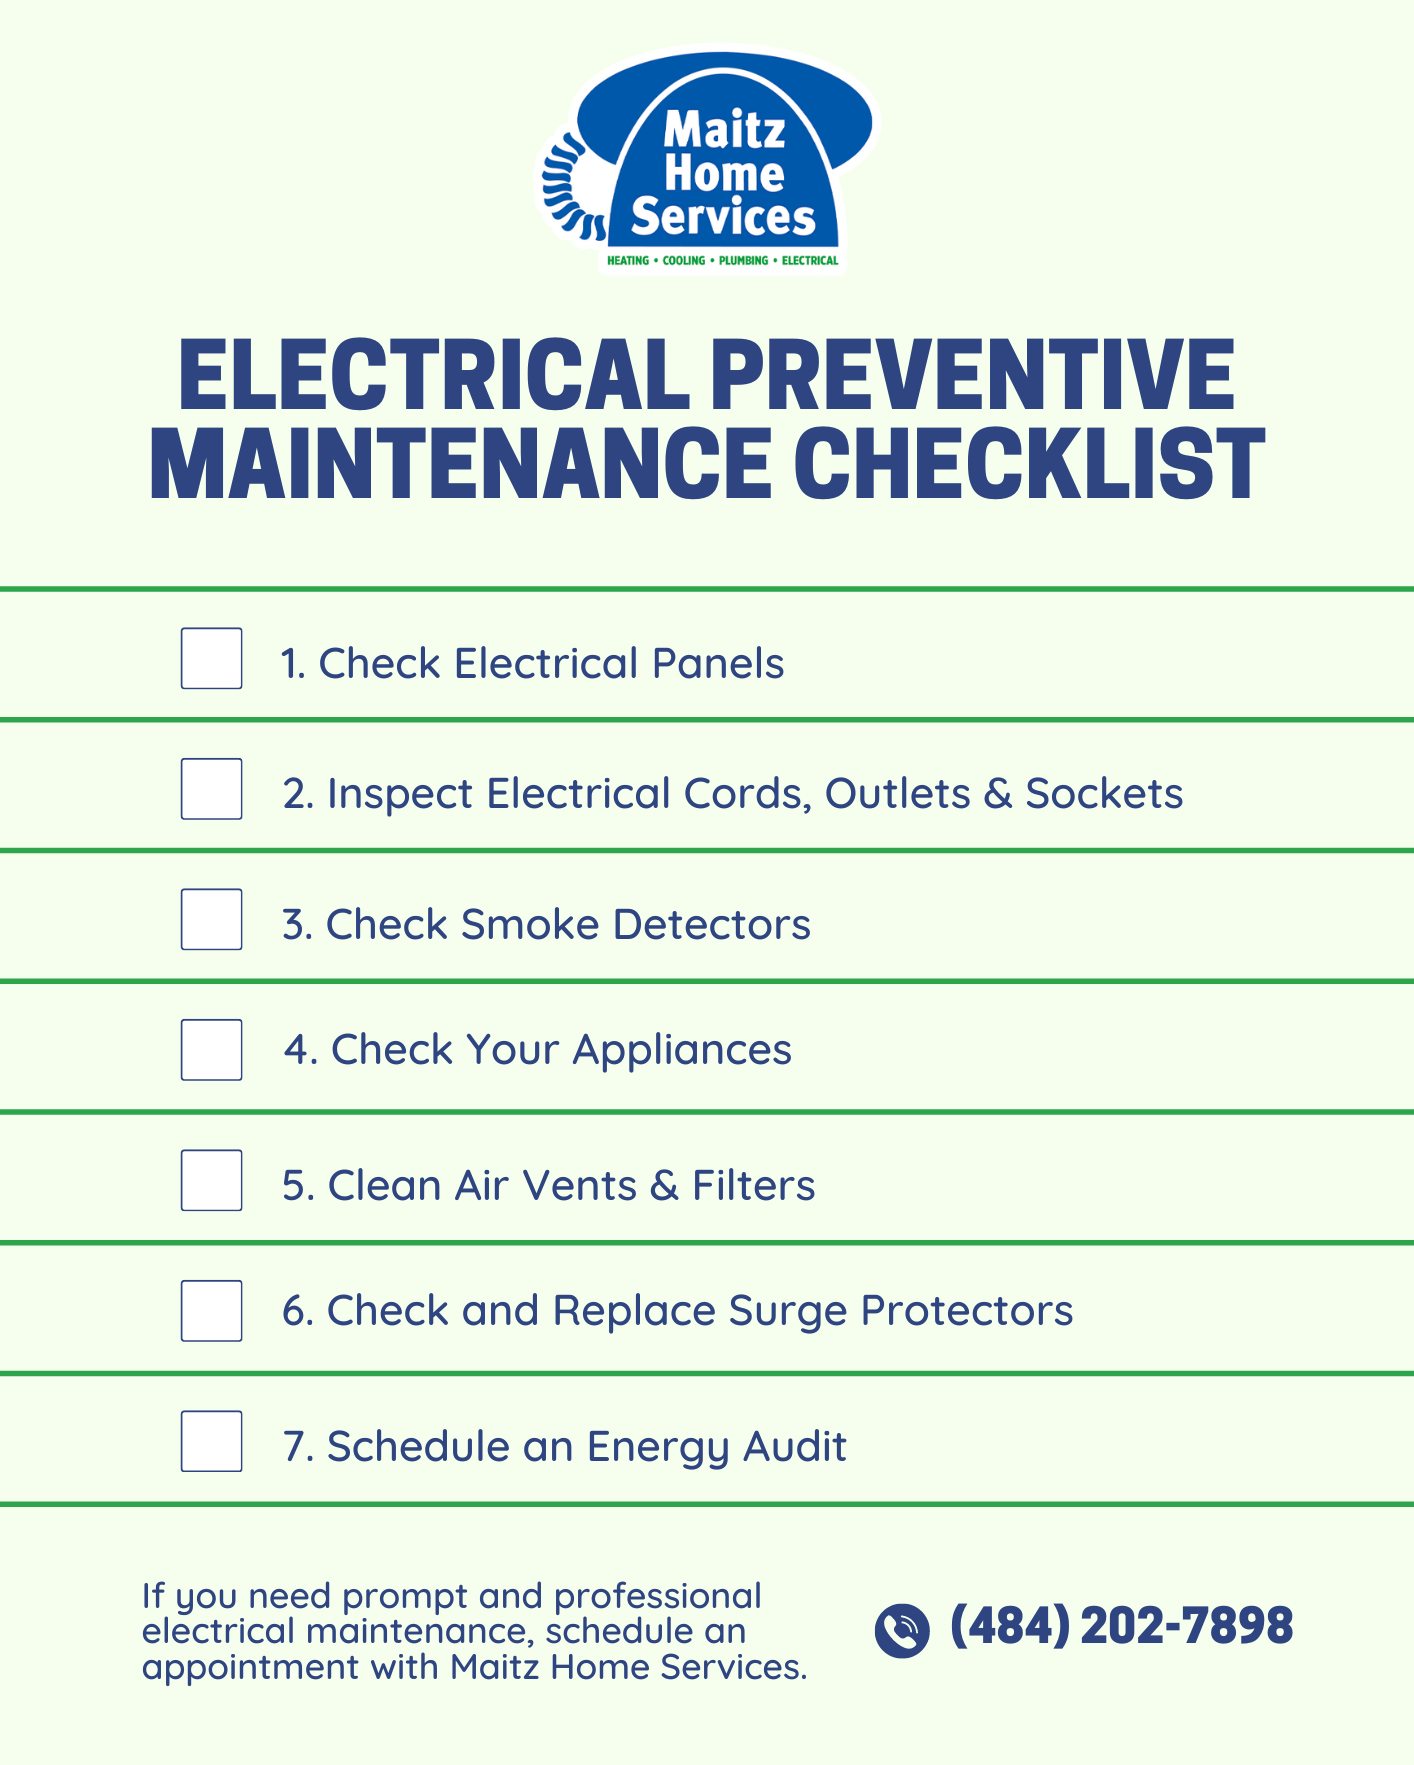 Electrical Preventive Maintenance Checklist